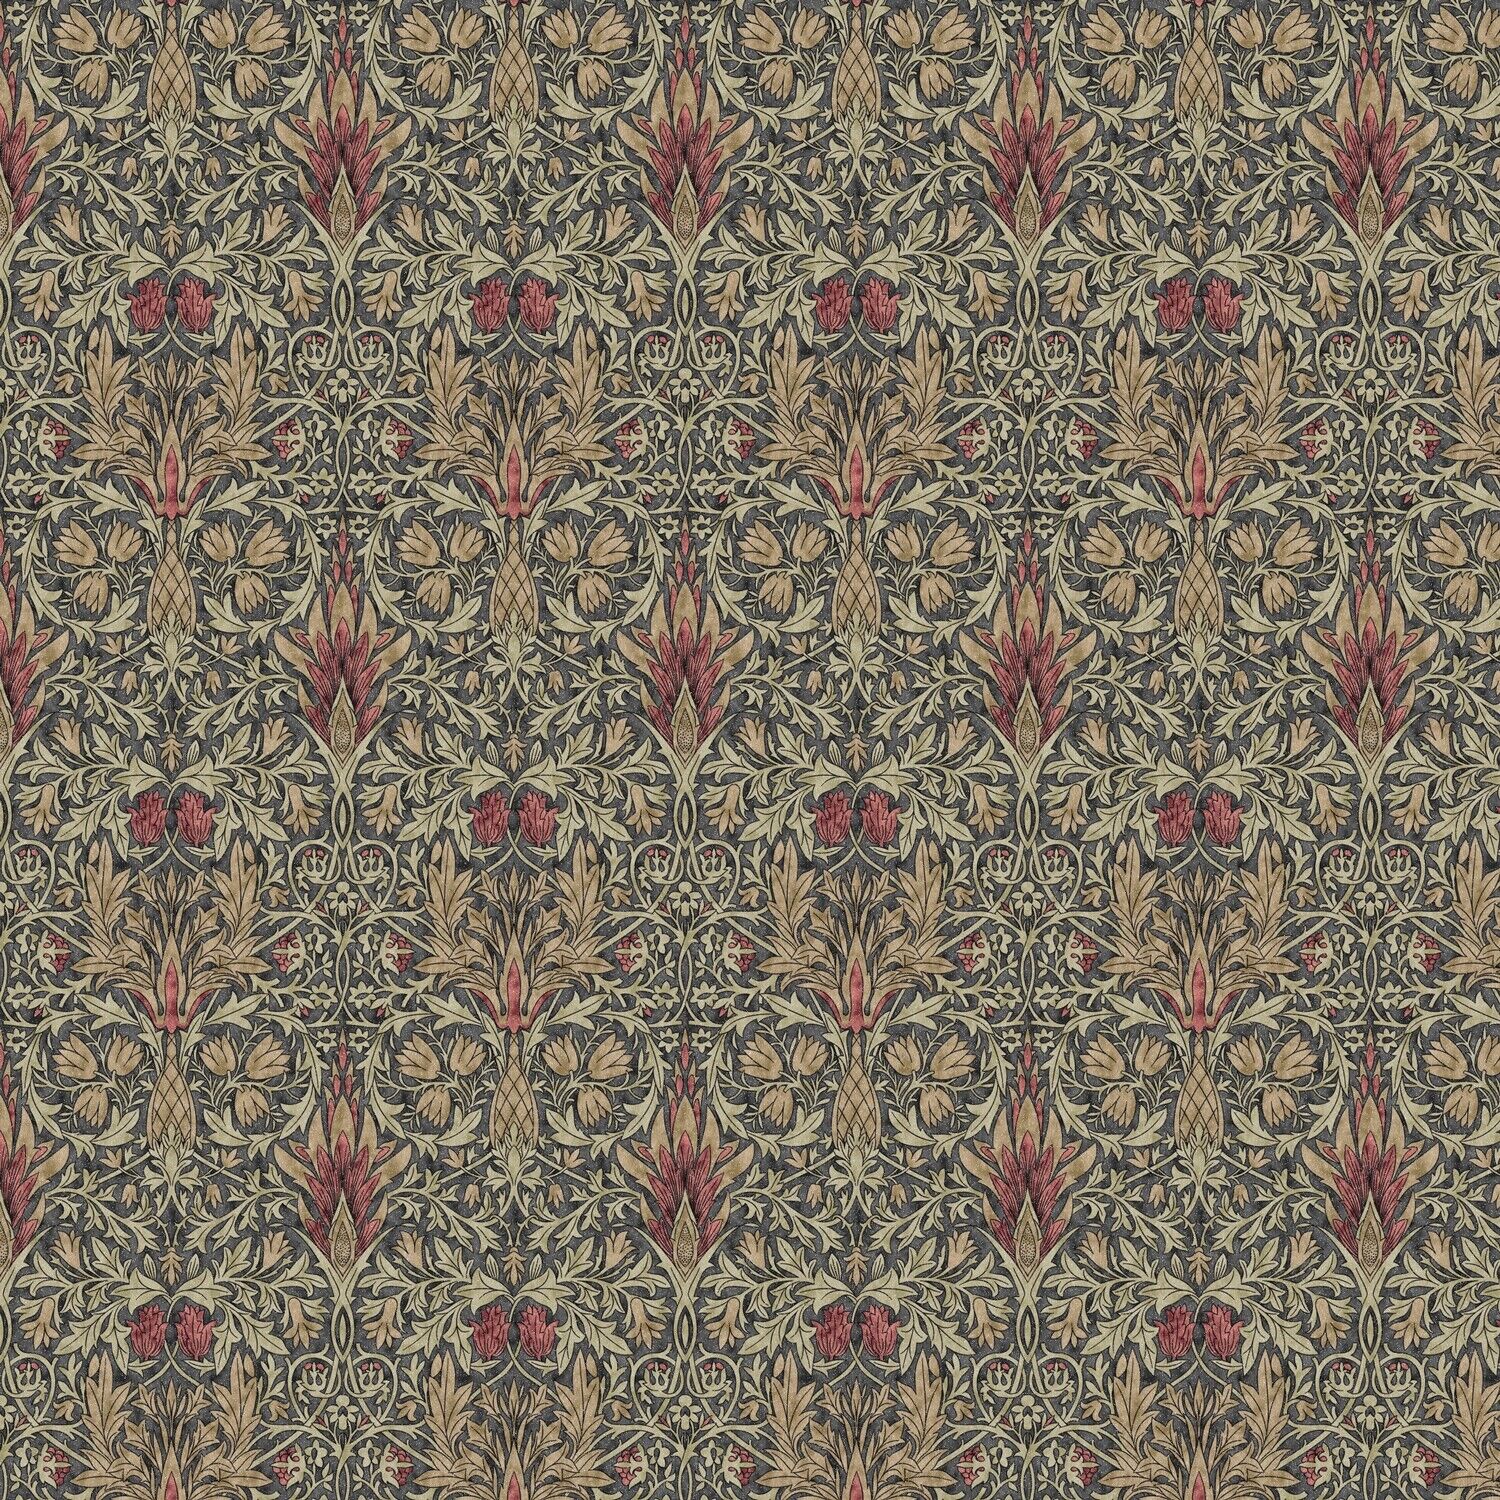 William Morris Snakeshead Upholstery Furniture Curtain cushion fabric M1798